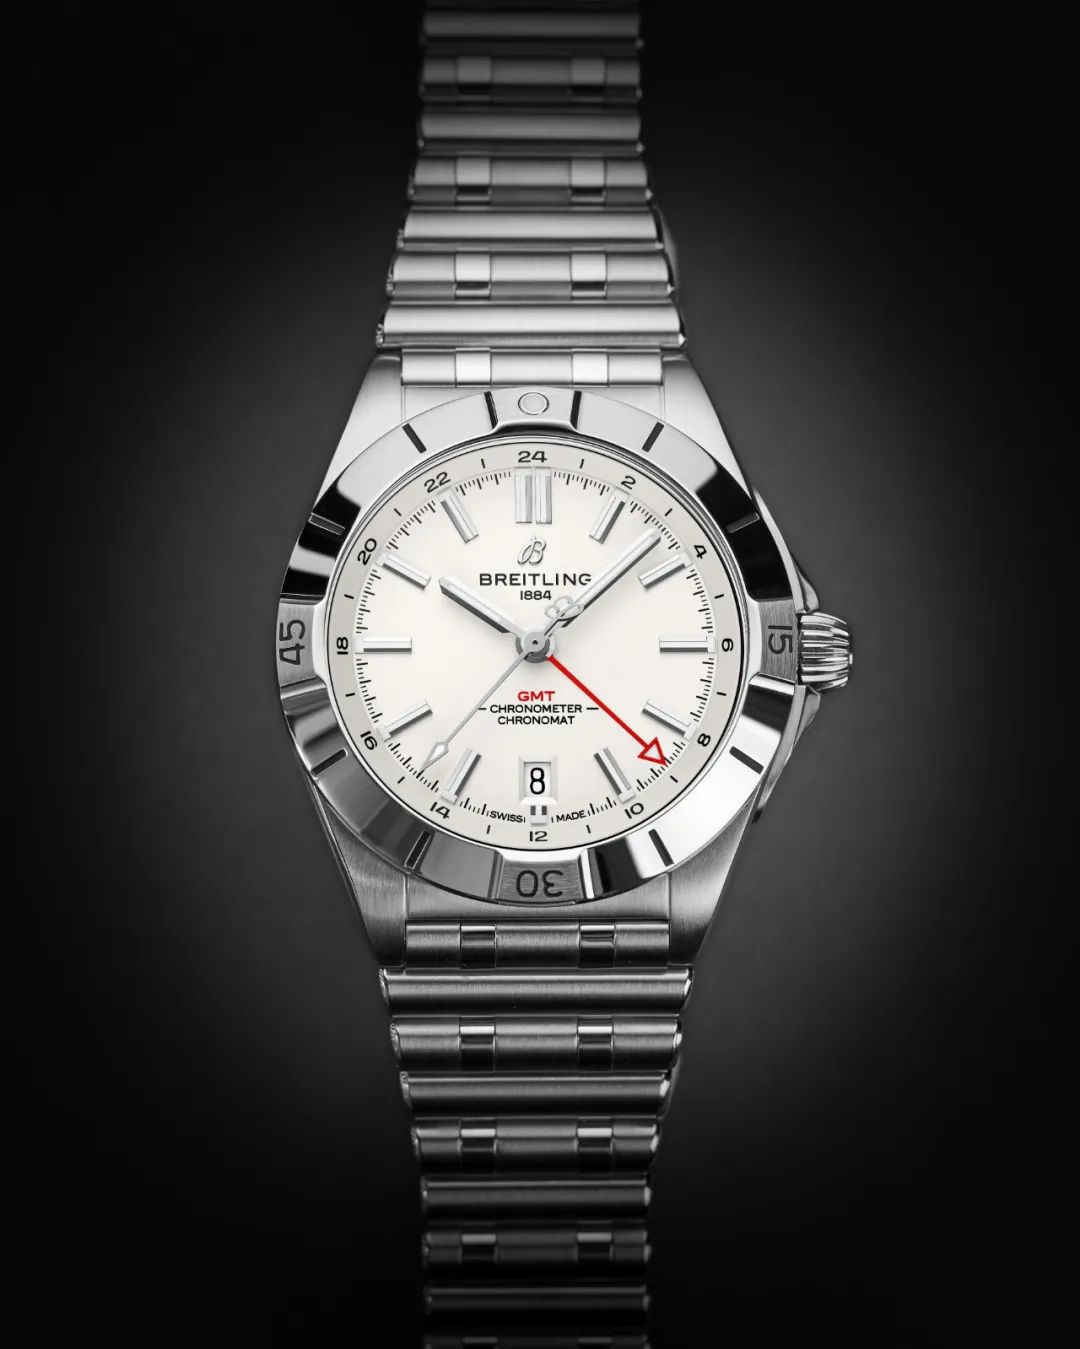 Breitling replica watch model 19